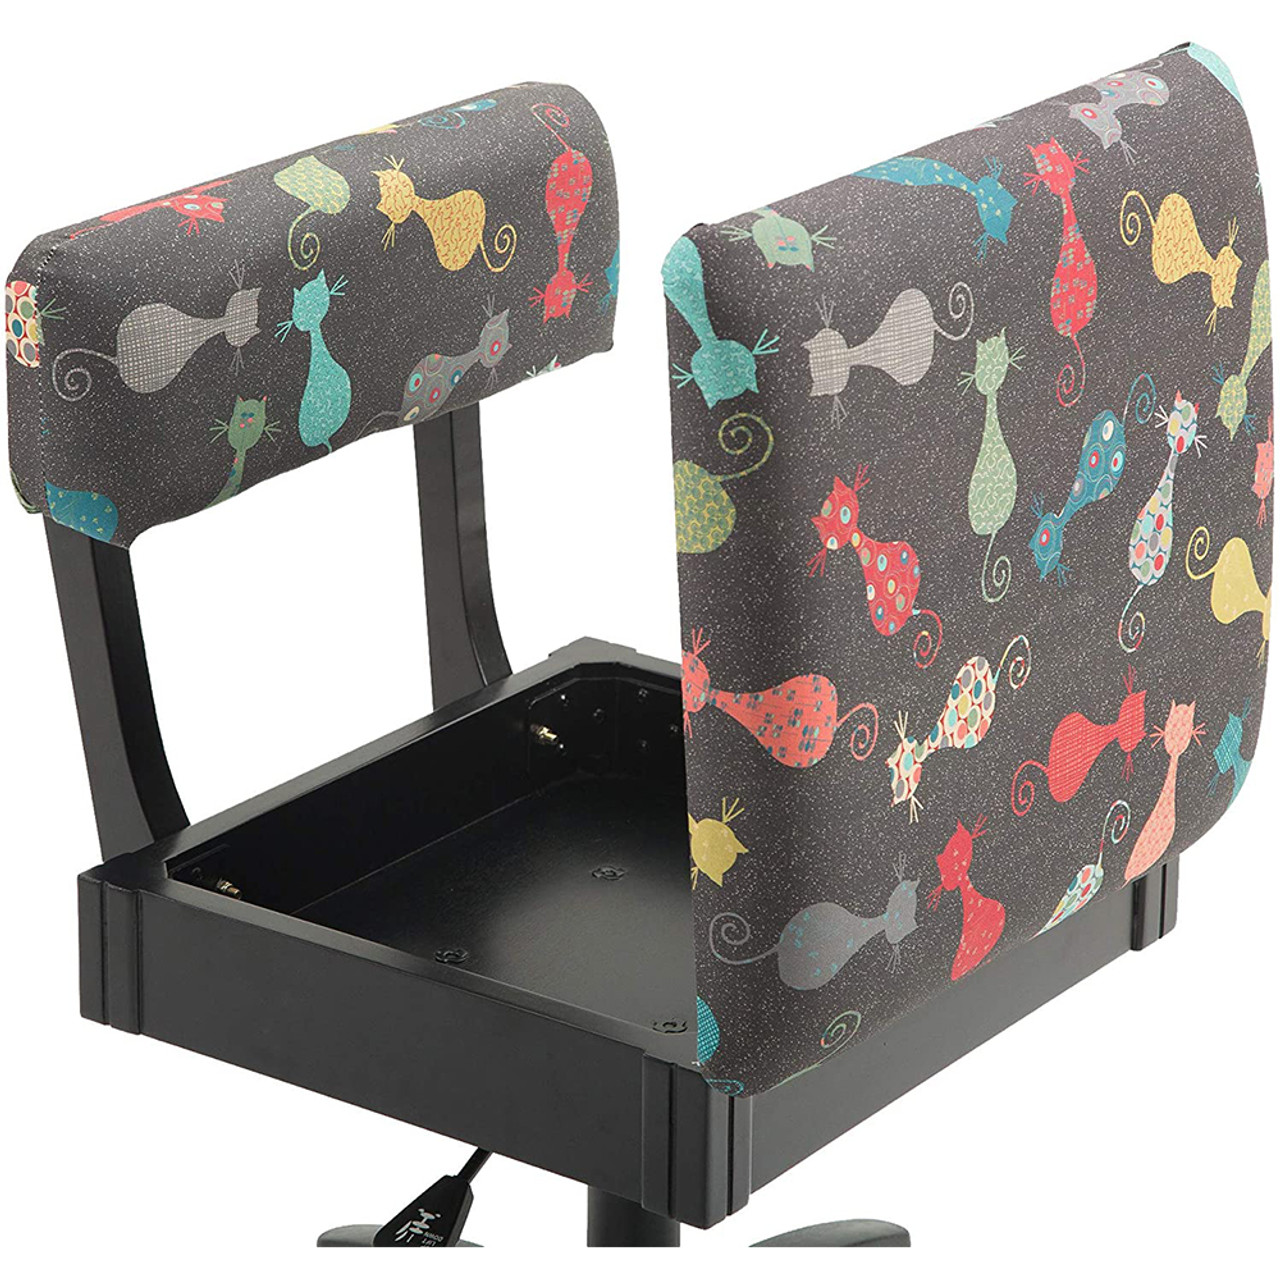 Arrow Riley Blake Hexi-Print Sewing Chair